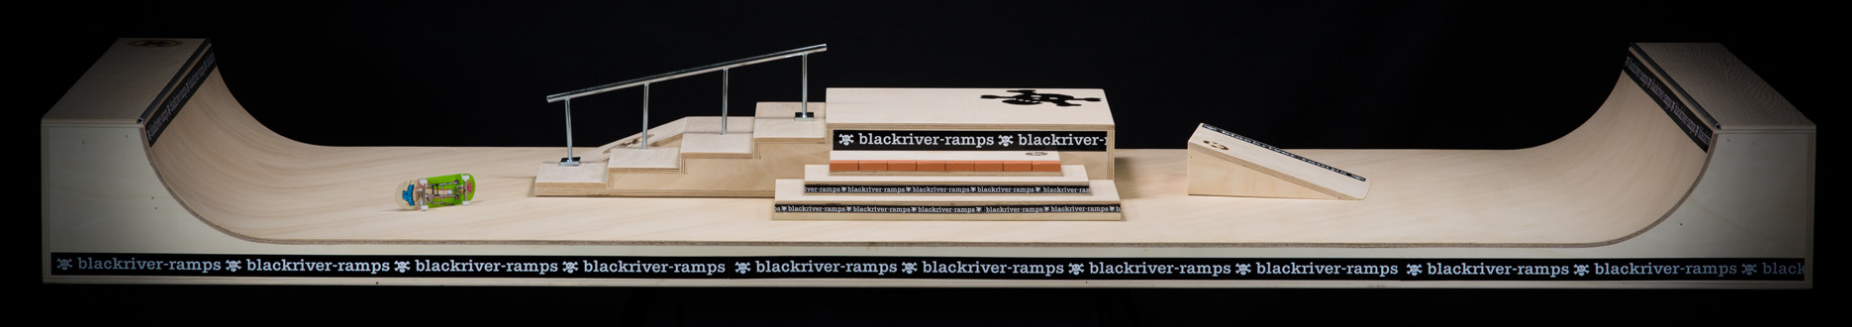 BLACKRIVER RAMPS PLAYGROUND XL HUGE FINGERBOARD PARK G13 G9